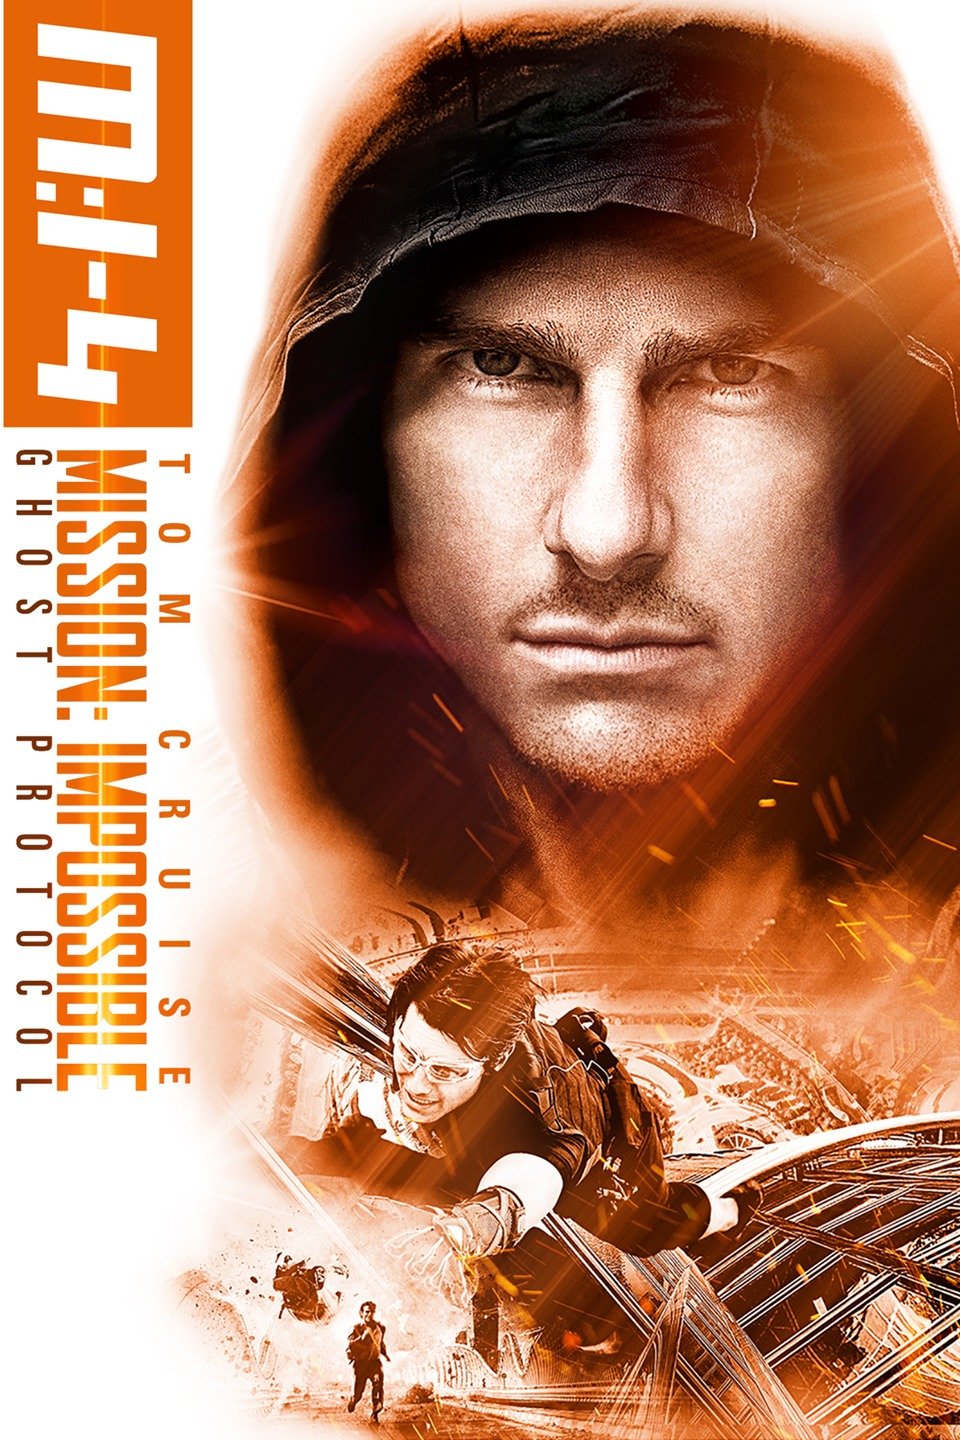 [MINI Super-HQ] Mission: Impossible Ghost Protocol (2011) ปฏิบัติการไร้เงา [1080p] [พากย์ไทย 5.1 + อังกฤษ DTS] [BluRay.DTS.x264] [บรรยายไทย + อังกฤษ] [เสียงไทย + ซับไทย] [ONE2UP]